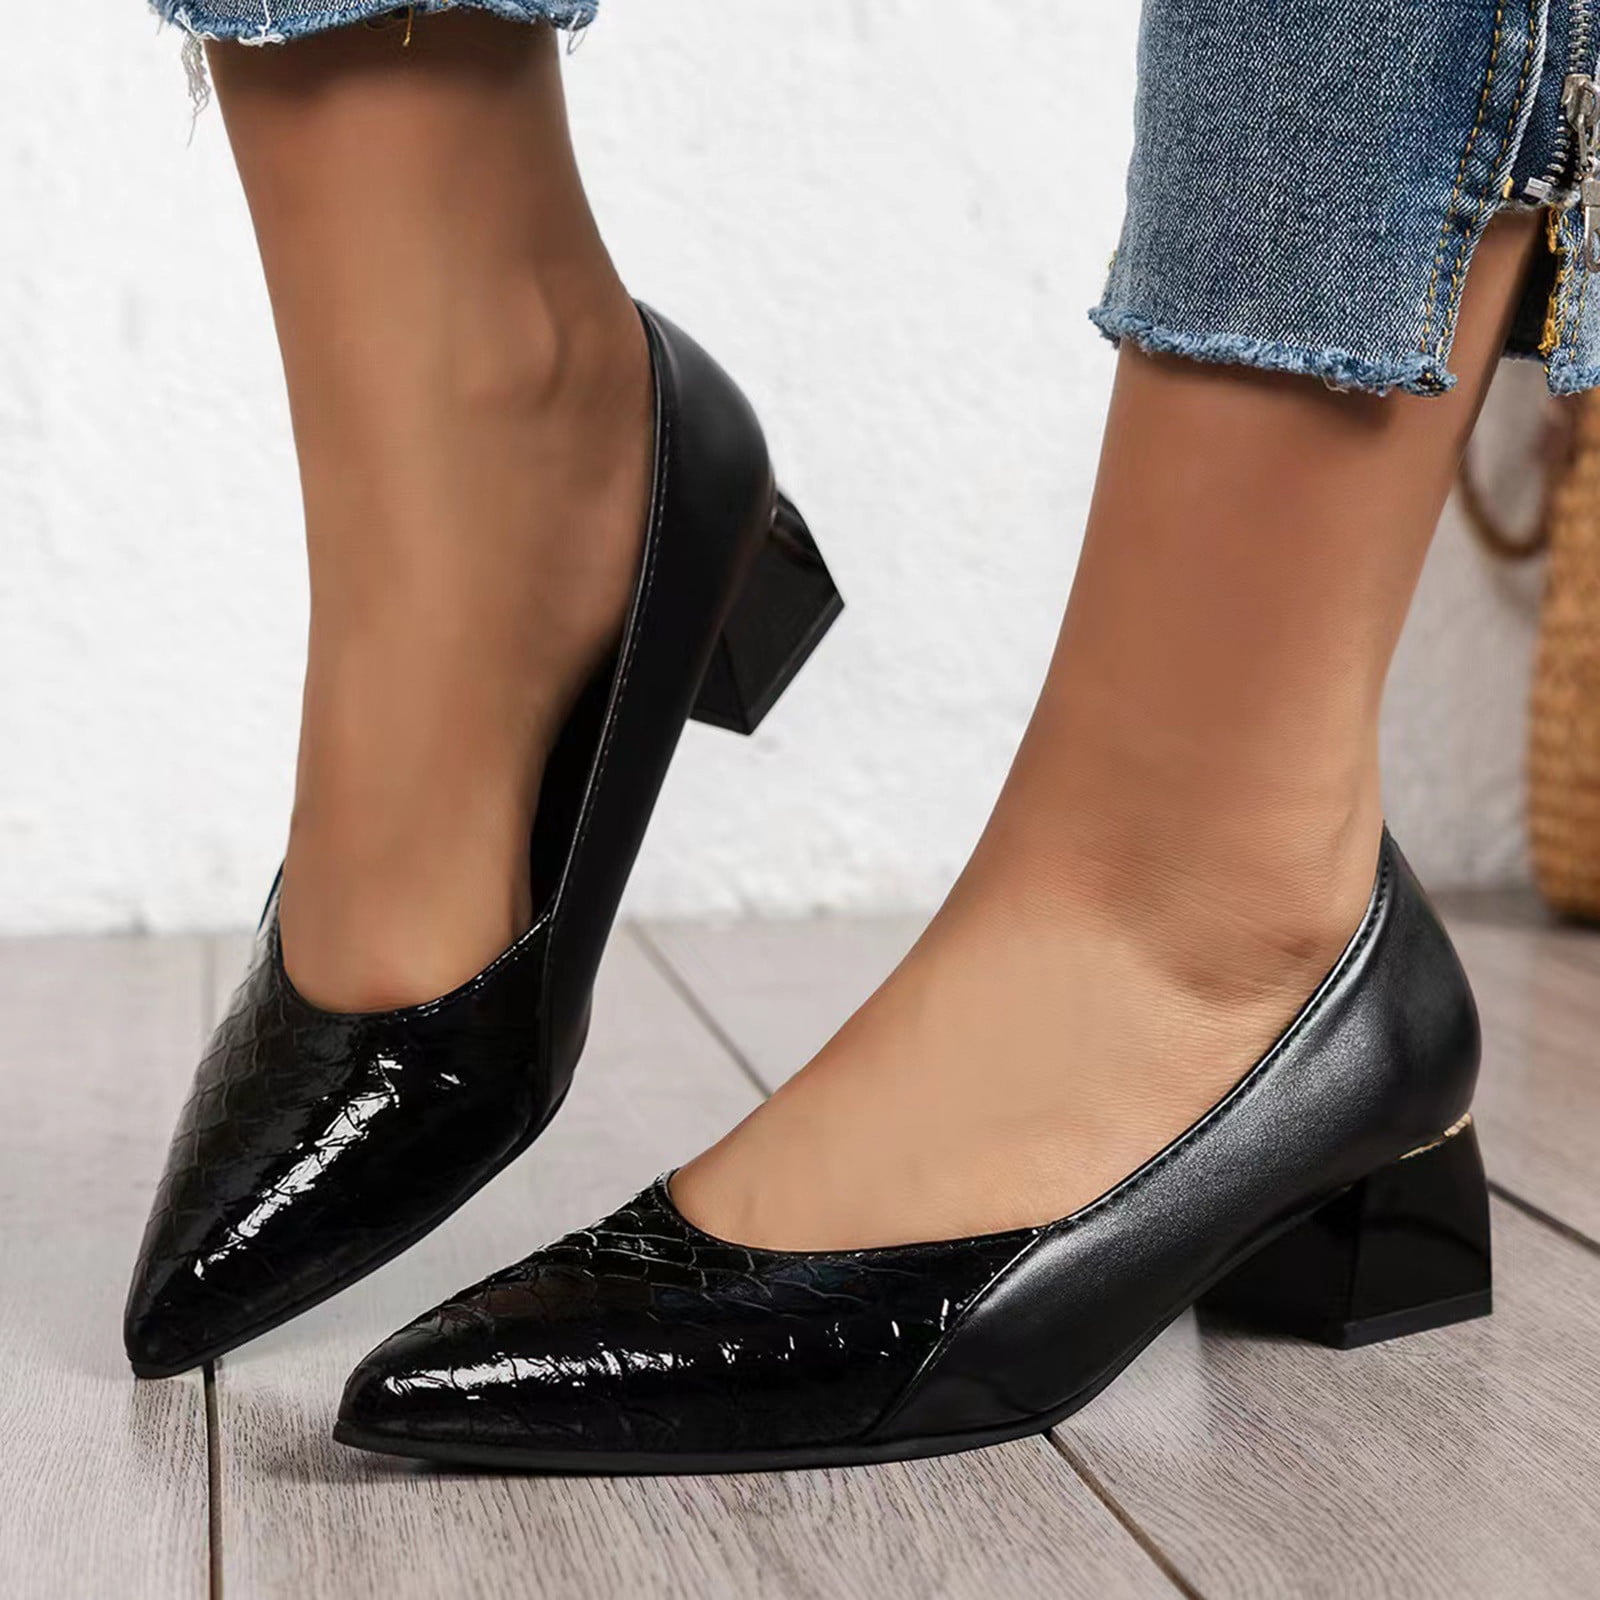 low heel women’s dress shoes